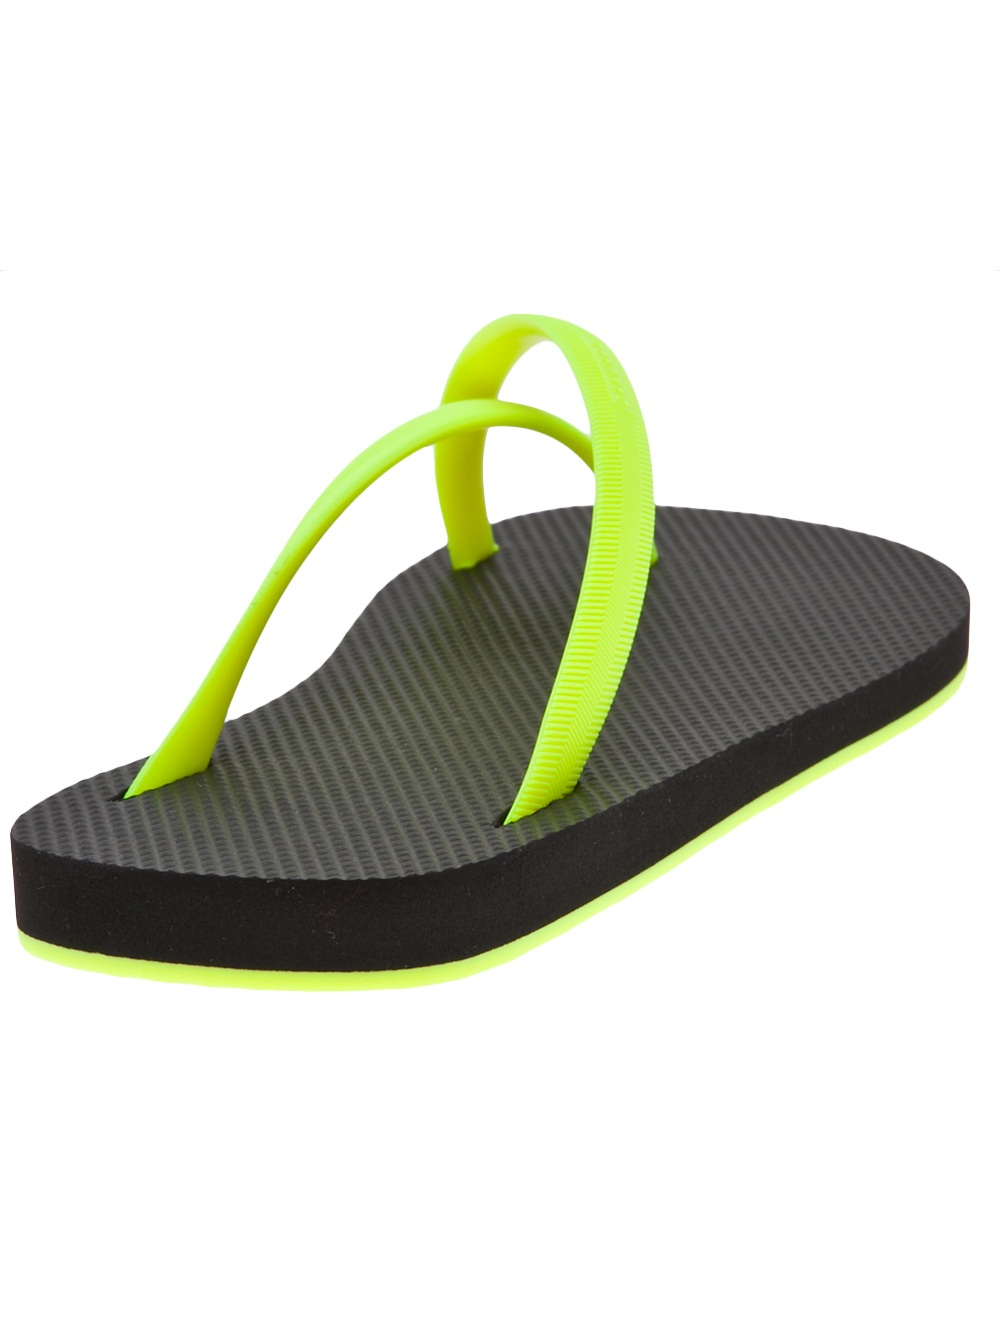 Danward Men's Cross Toe Flip-Flop Sandals S14FWFF1 $78 NEW | eBay